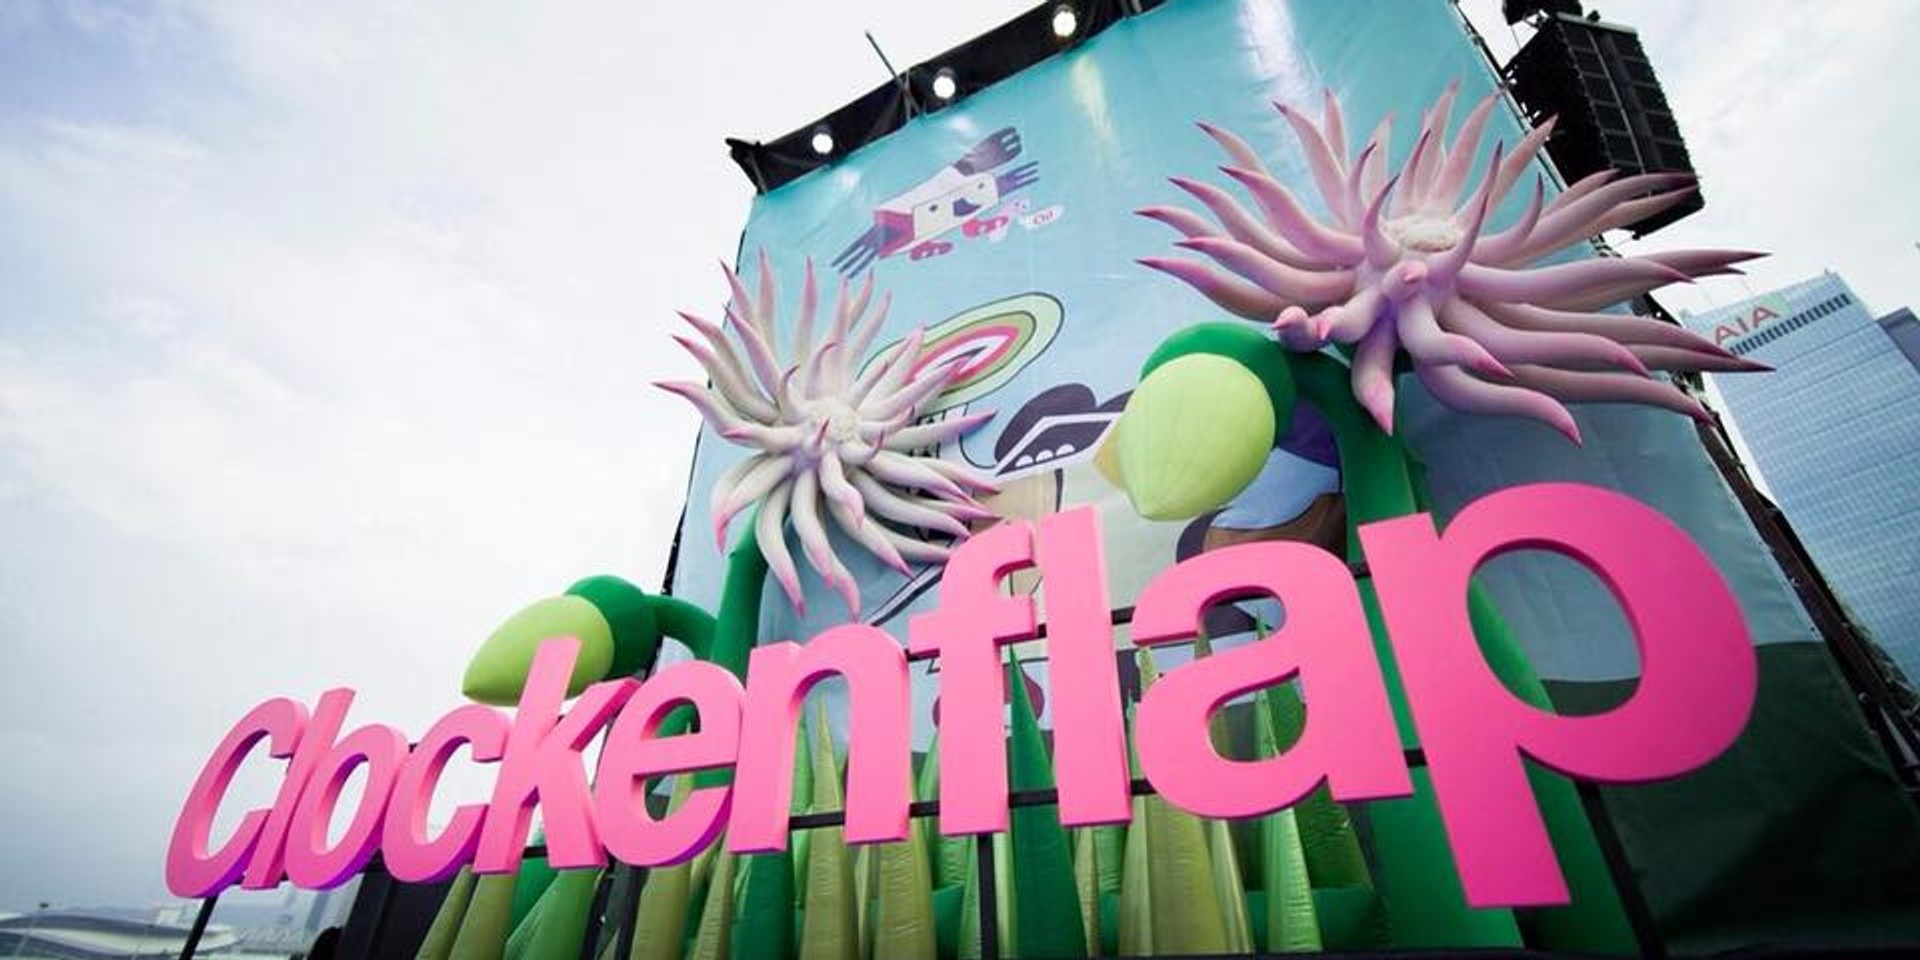 Hong Kong's Clockenflap festival pushed to 2021 